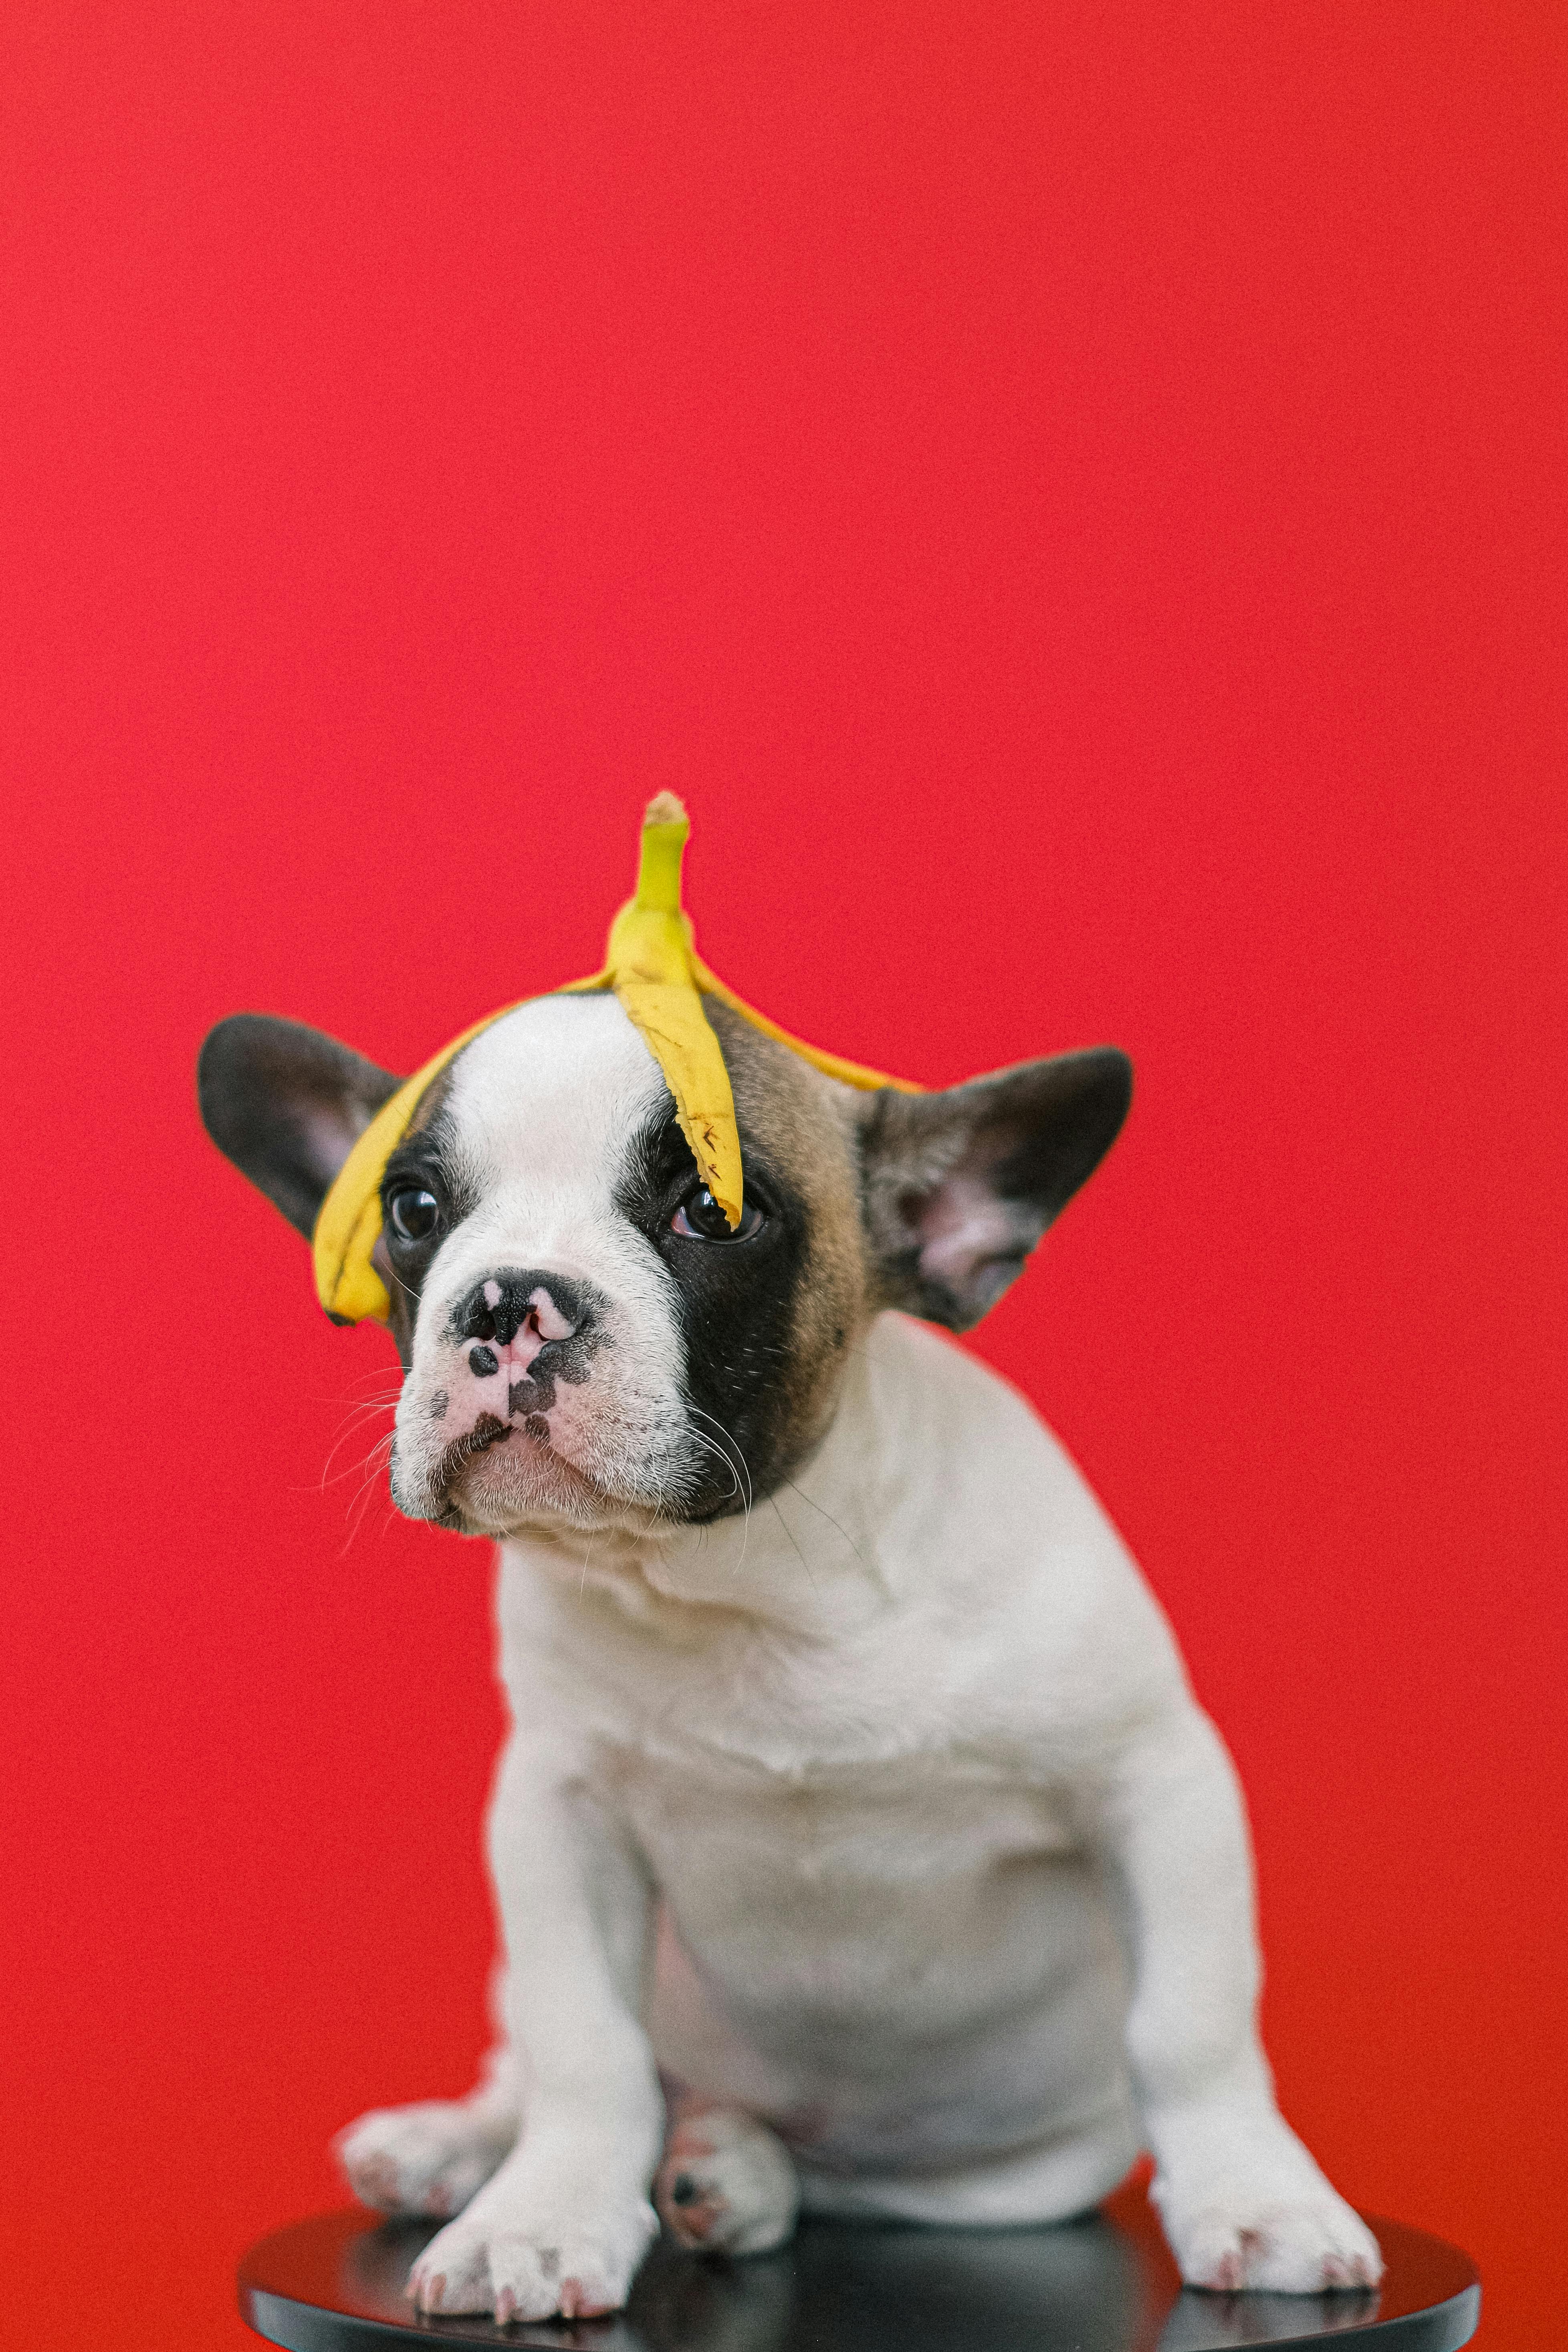 banana peel on the head of a french bulldog